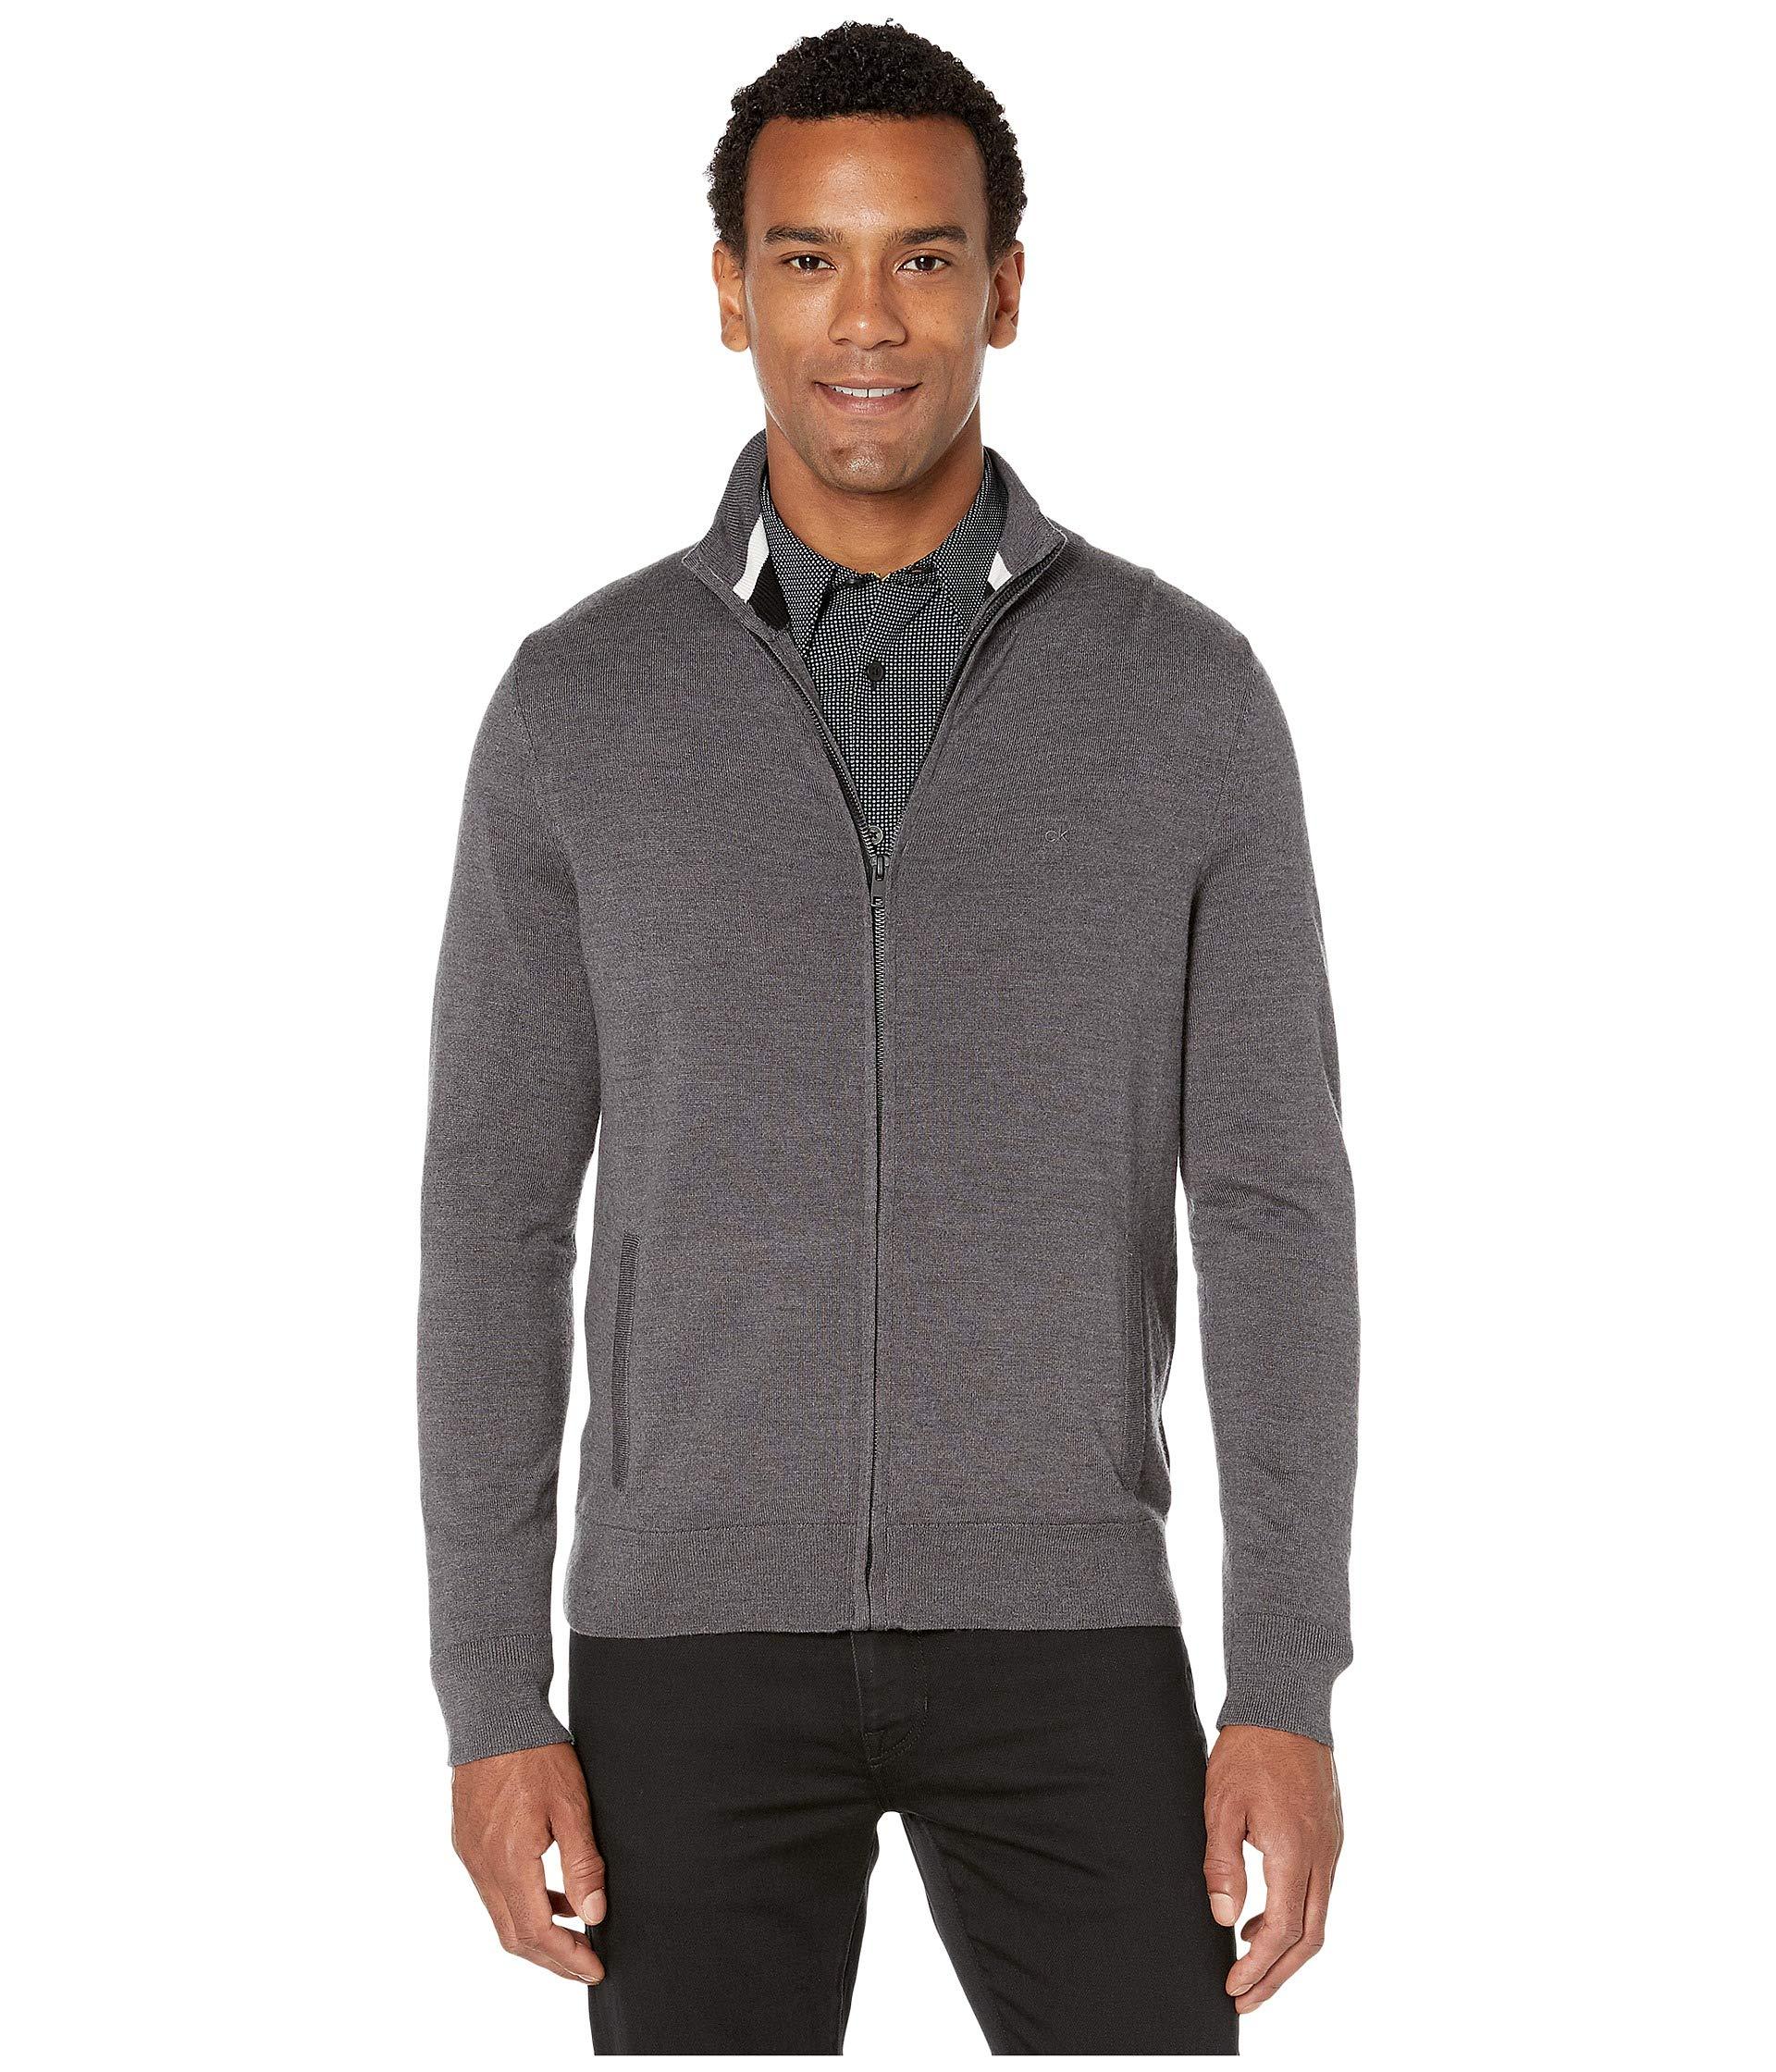 Calvin Klein Wool Merino Full Zip Sweater in Gray for Men - Lyst